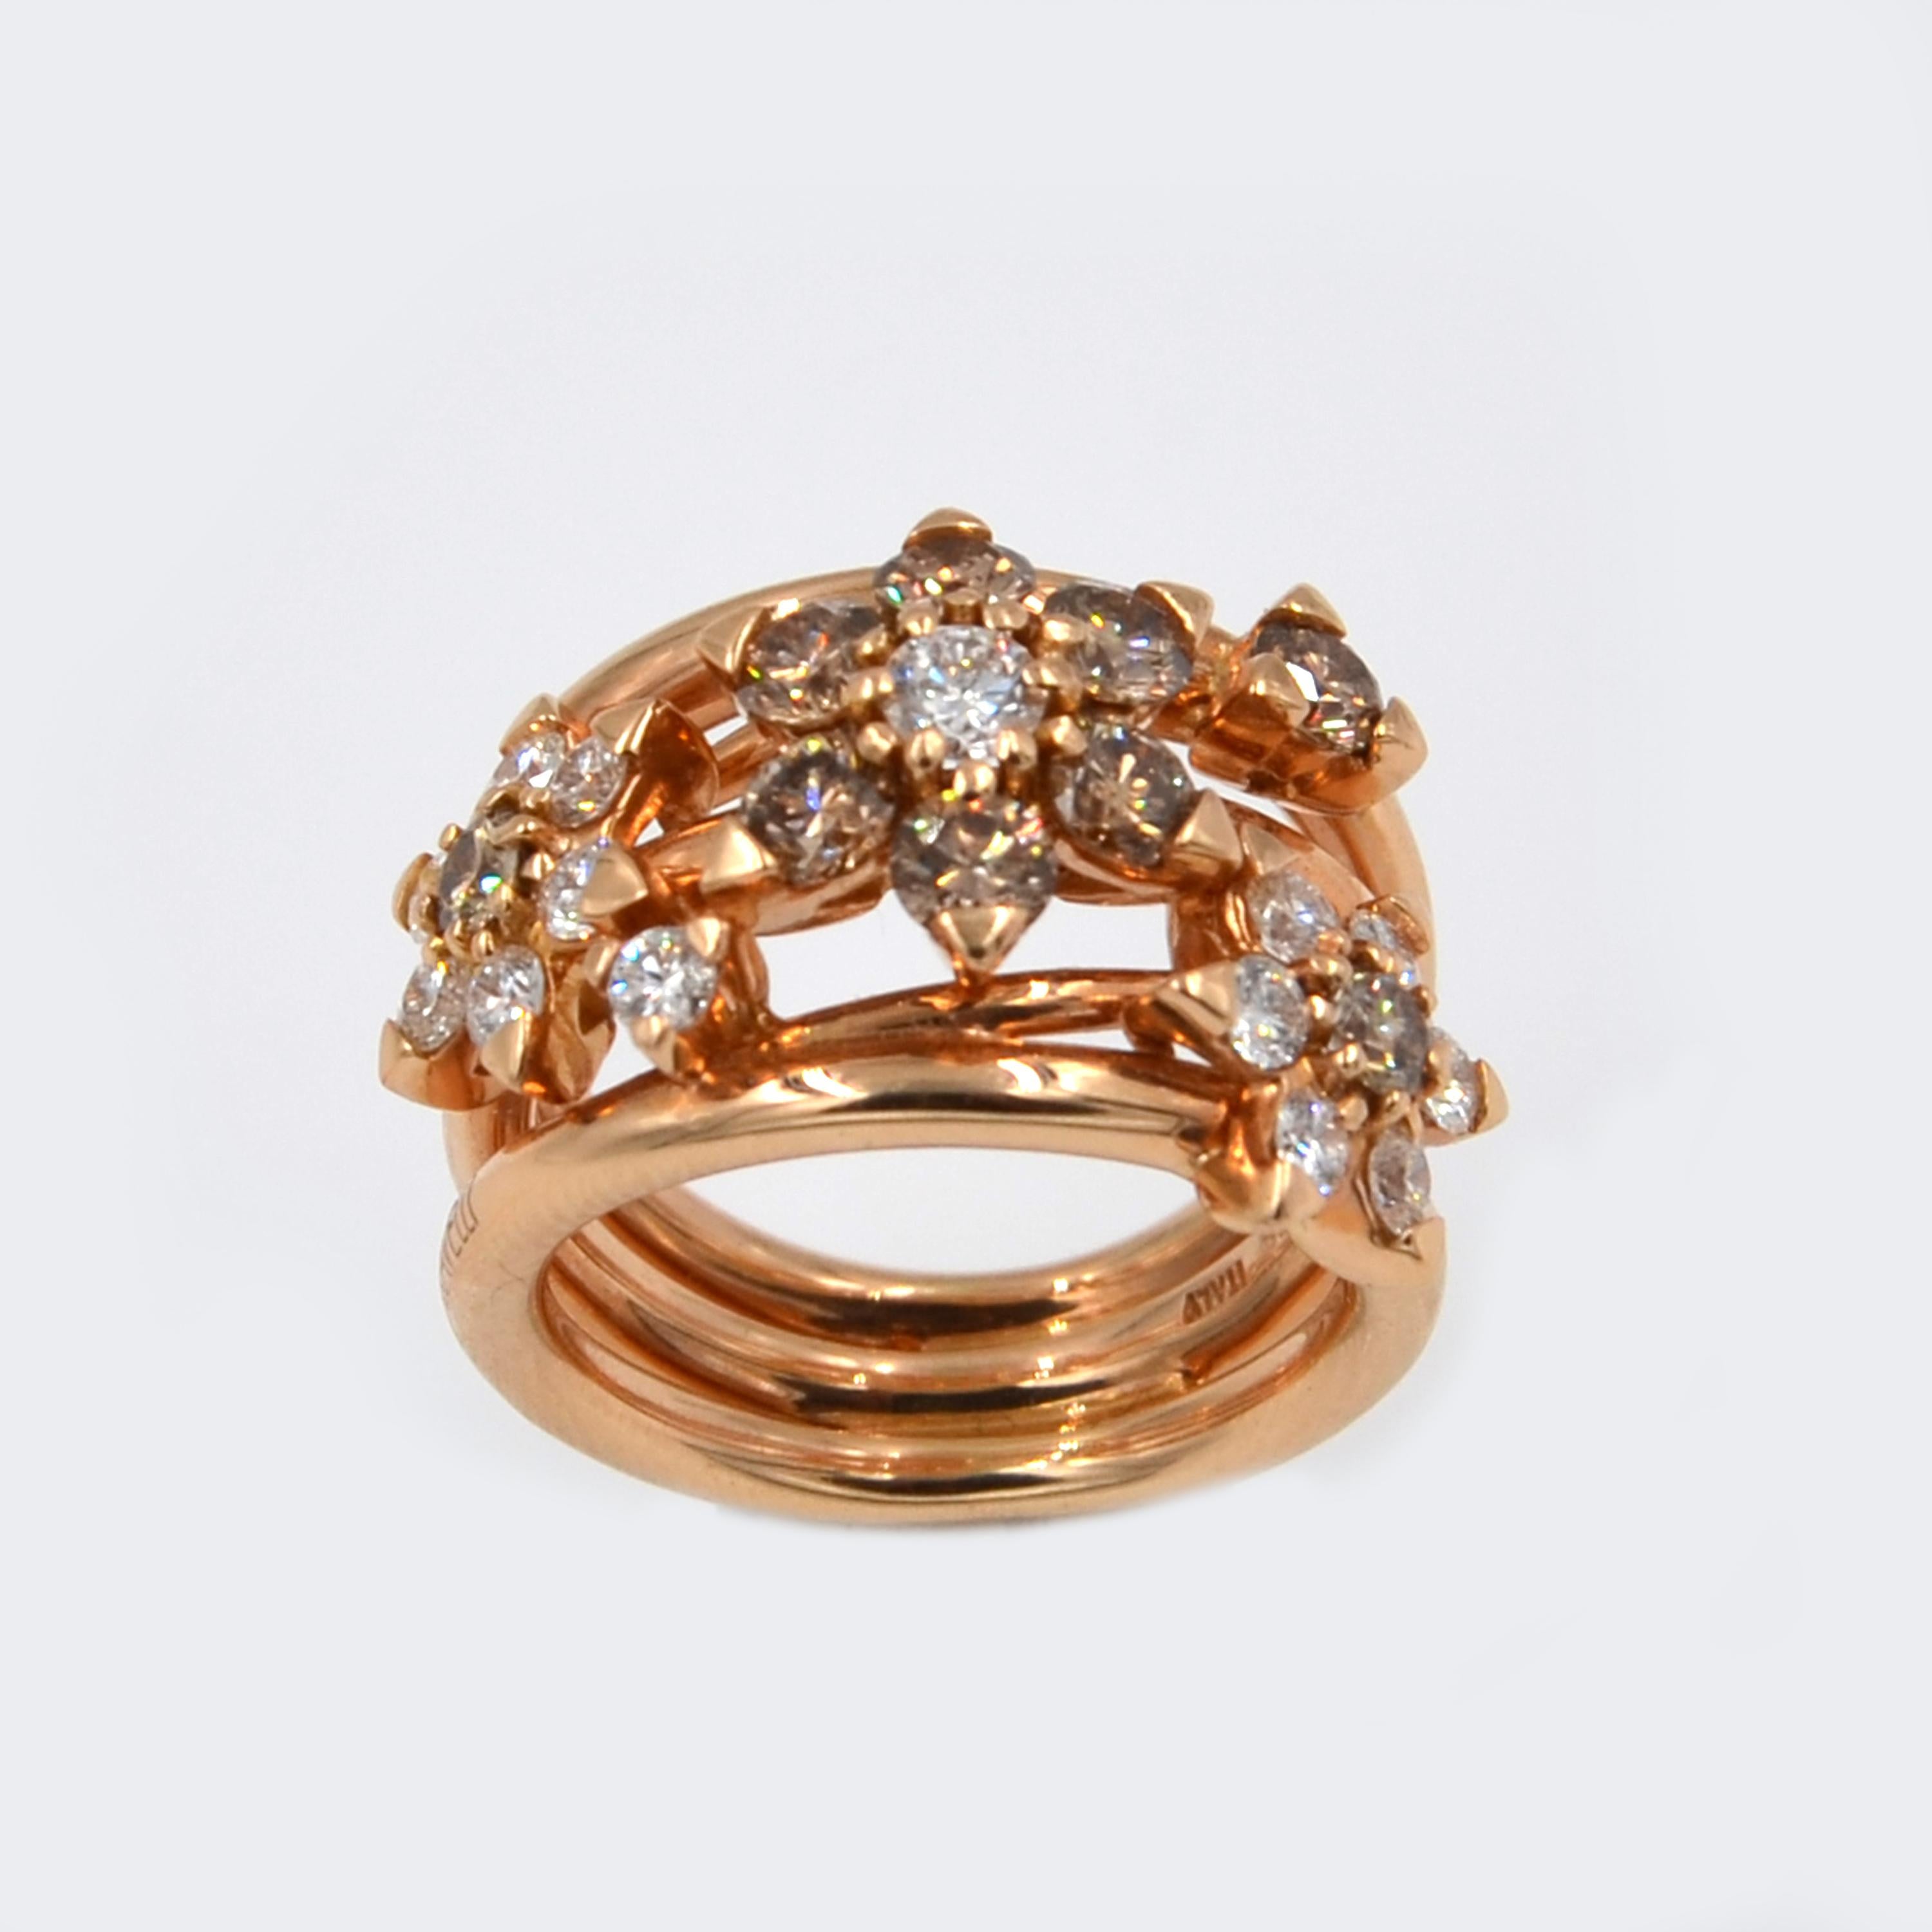 Women's 18 Karat Rose Gold White and Brown Diamonds Garavelli Flower Cocktail Ring